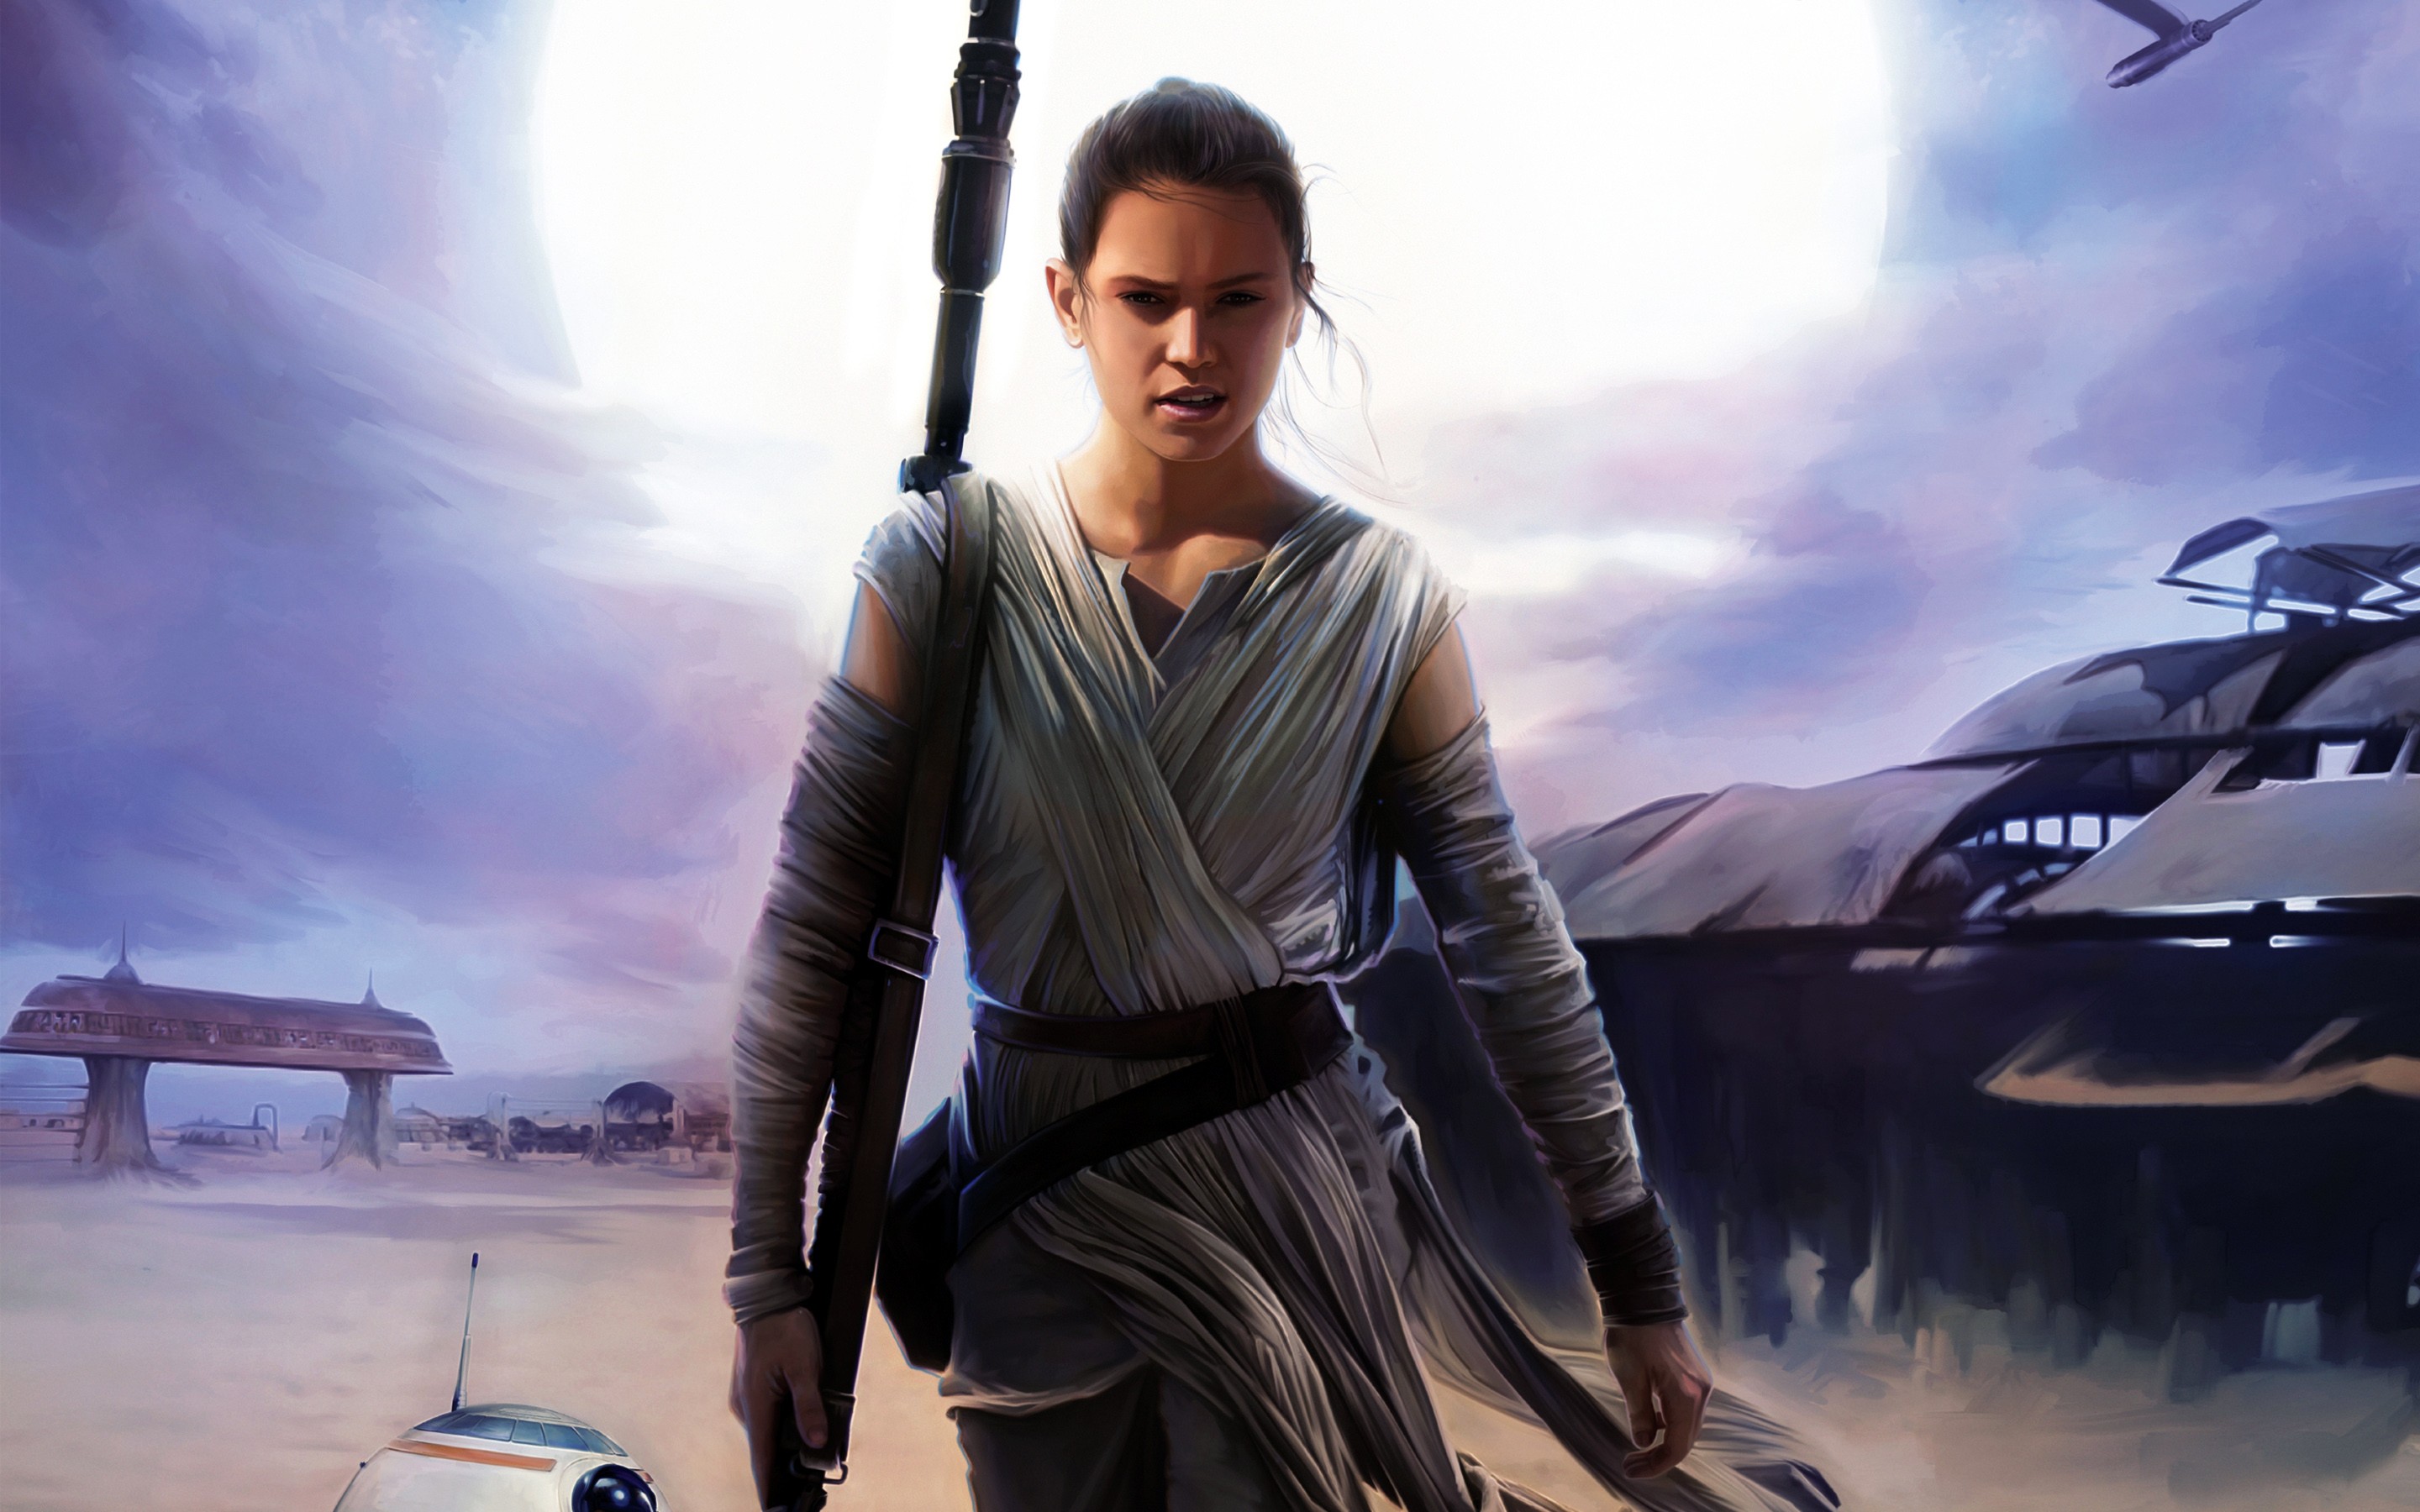 General 2880x1800 Star Wars Jedi Star Wars: The Force Awakens Daisy Ridley Star Wars Heroes movies Rey (Star Wars) science fiction science fiction women